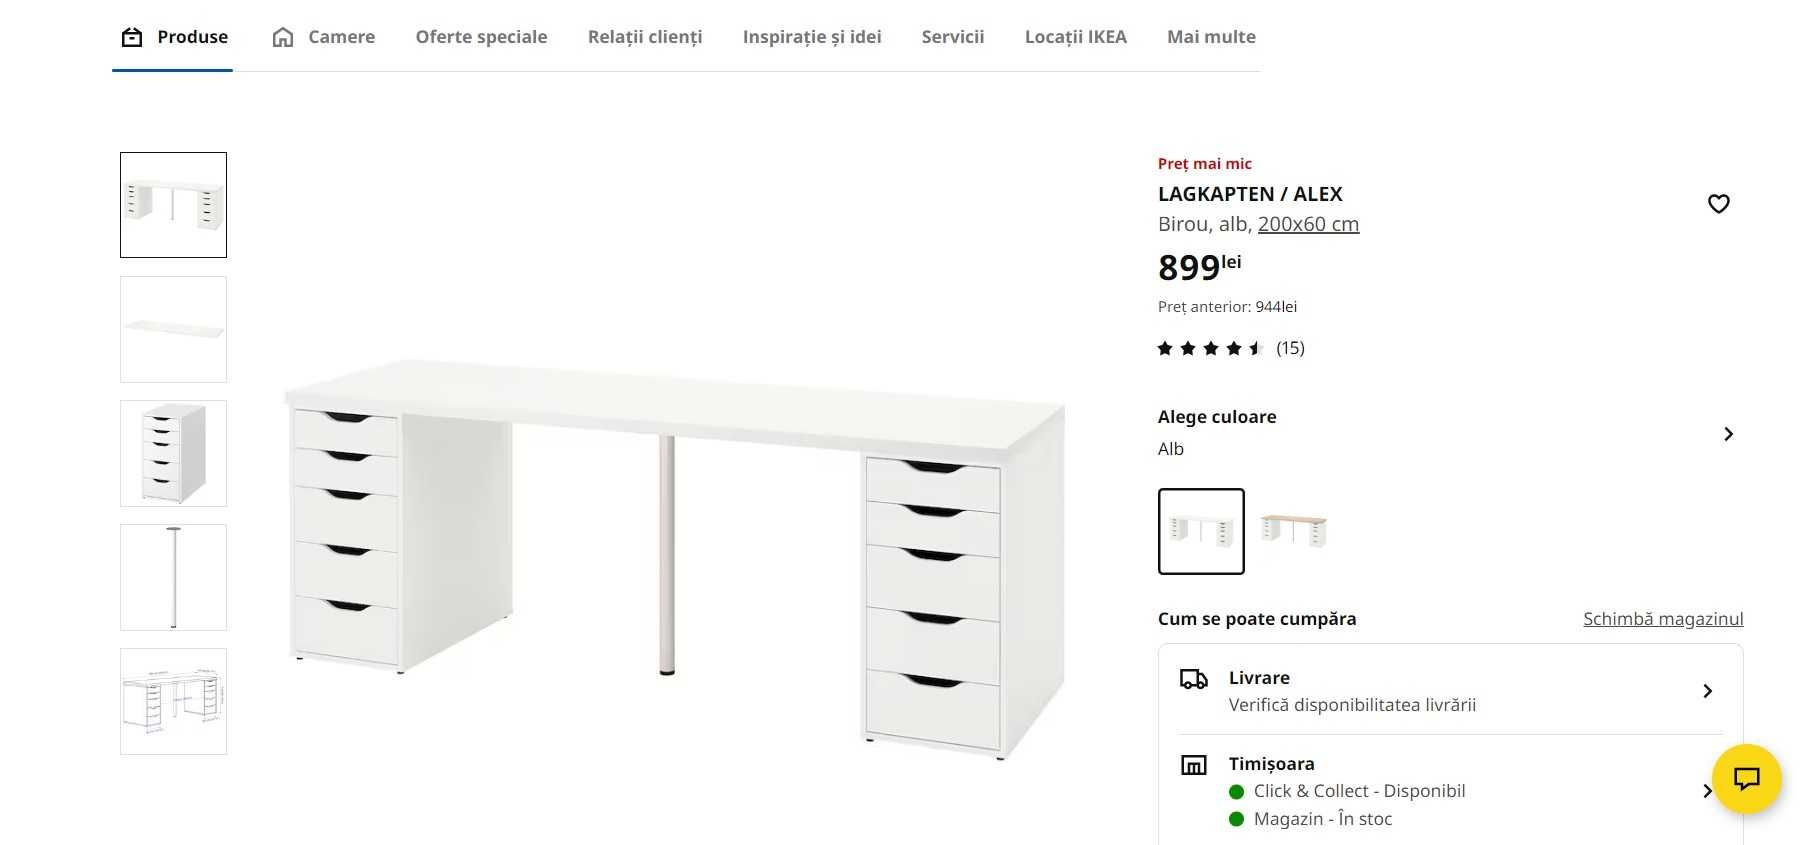 Birou IKEA Lagkapten/Alex